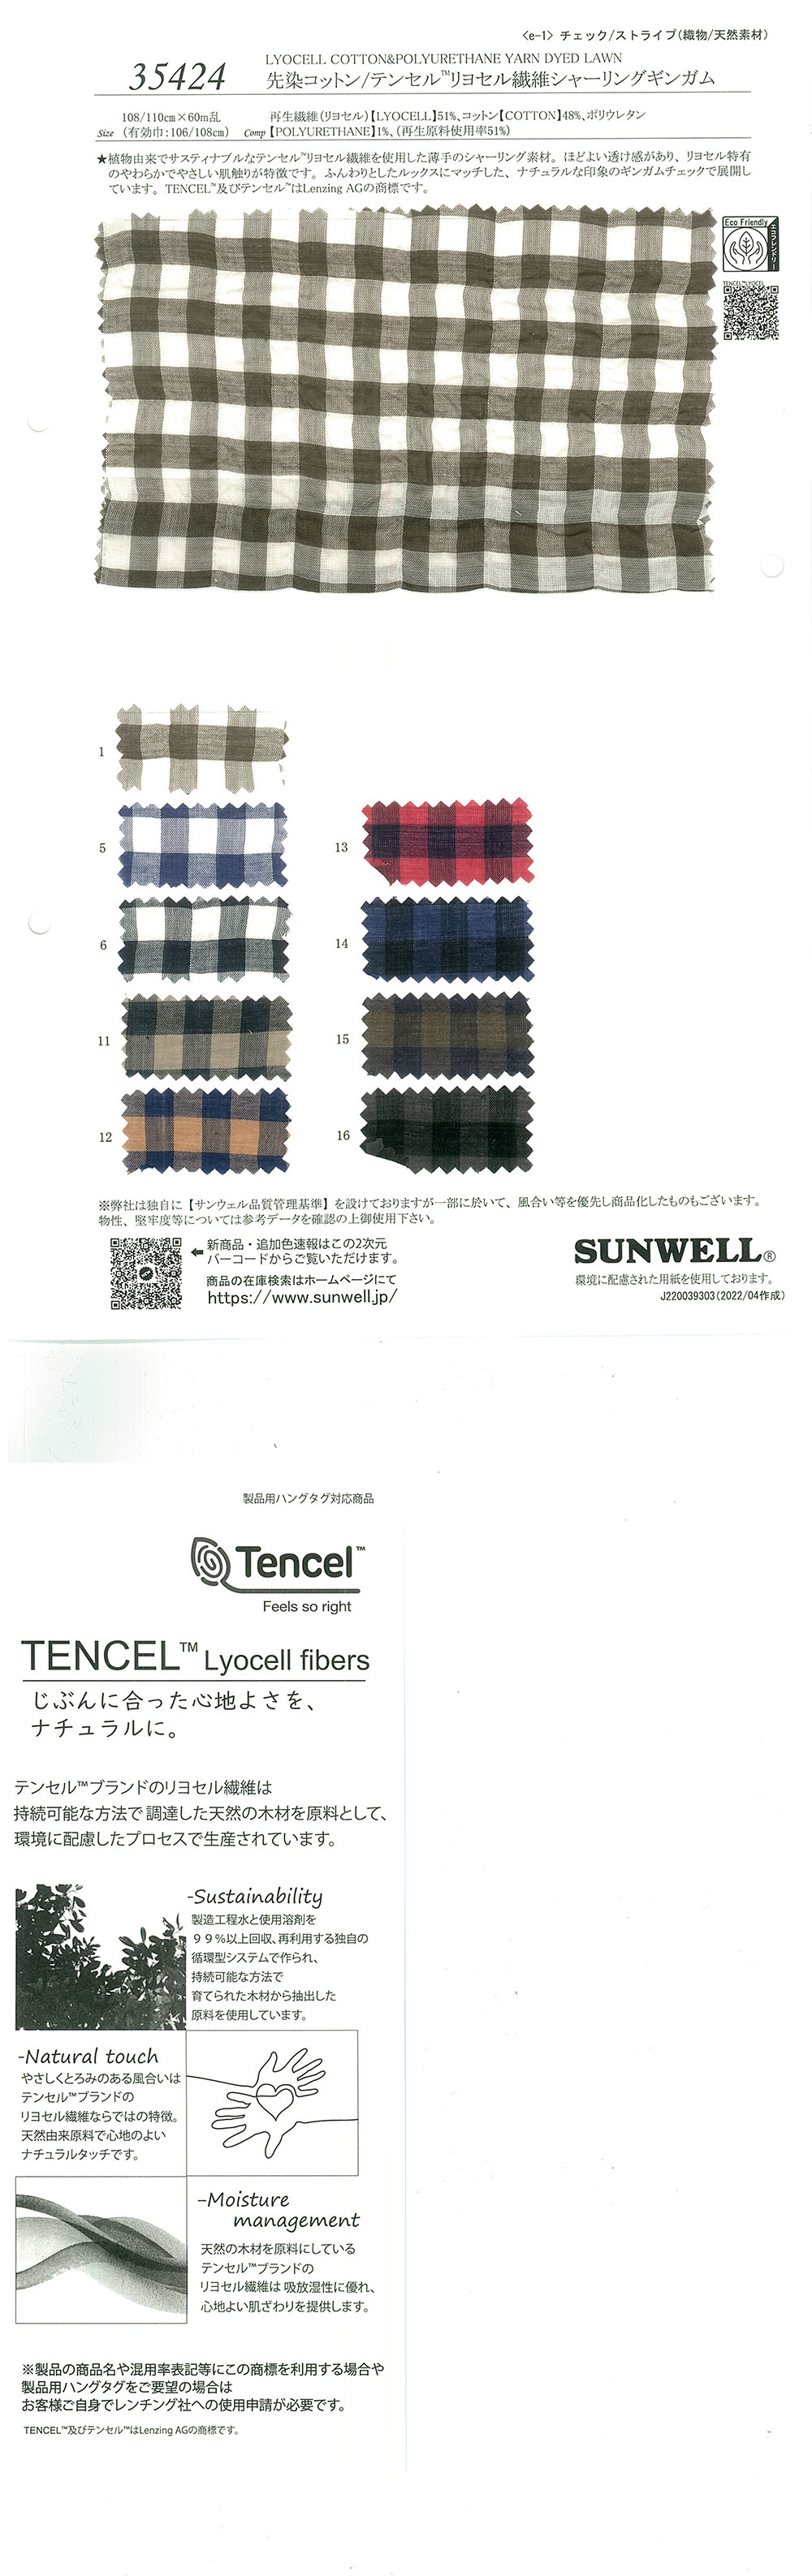 35424 Coton Teint En Fil/Tencel (TM) Fibre Lyocell Fronces Vichy[Fabrication De Textile] SUNWELL